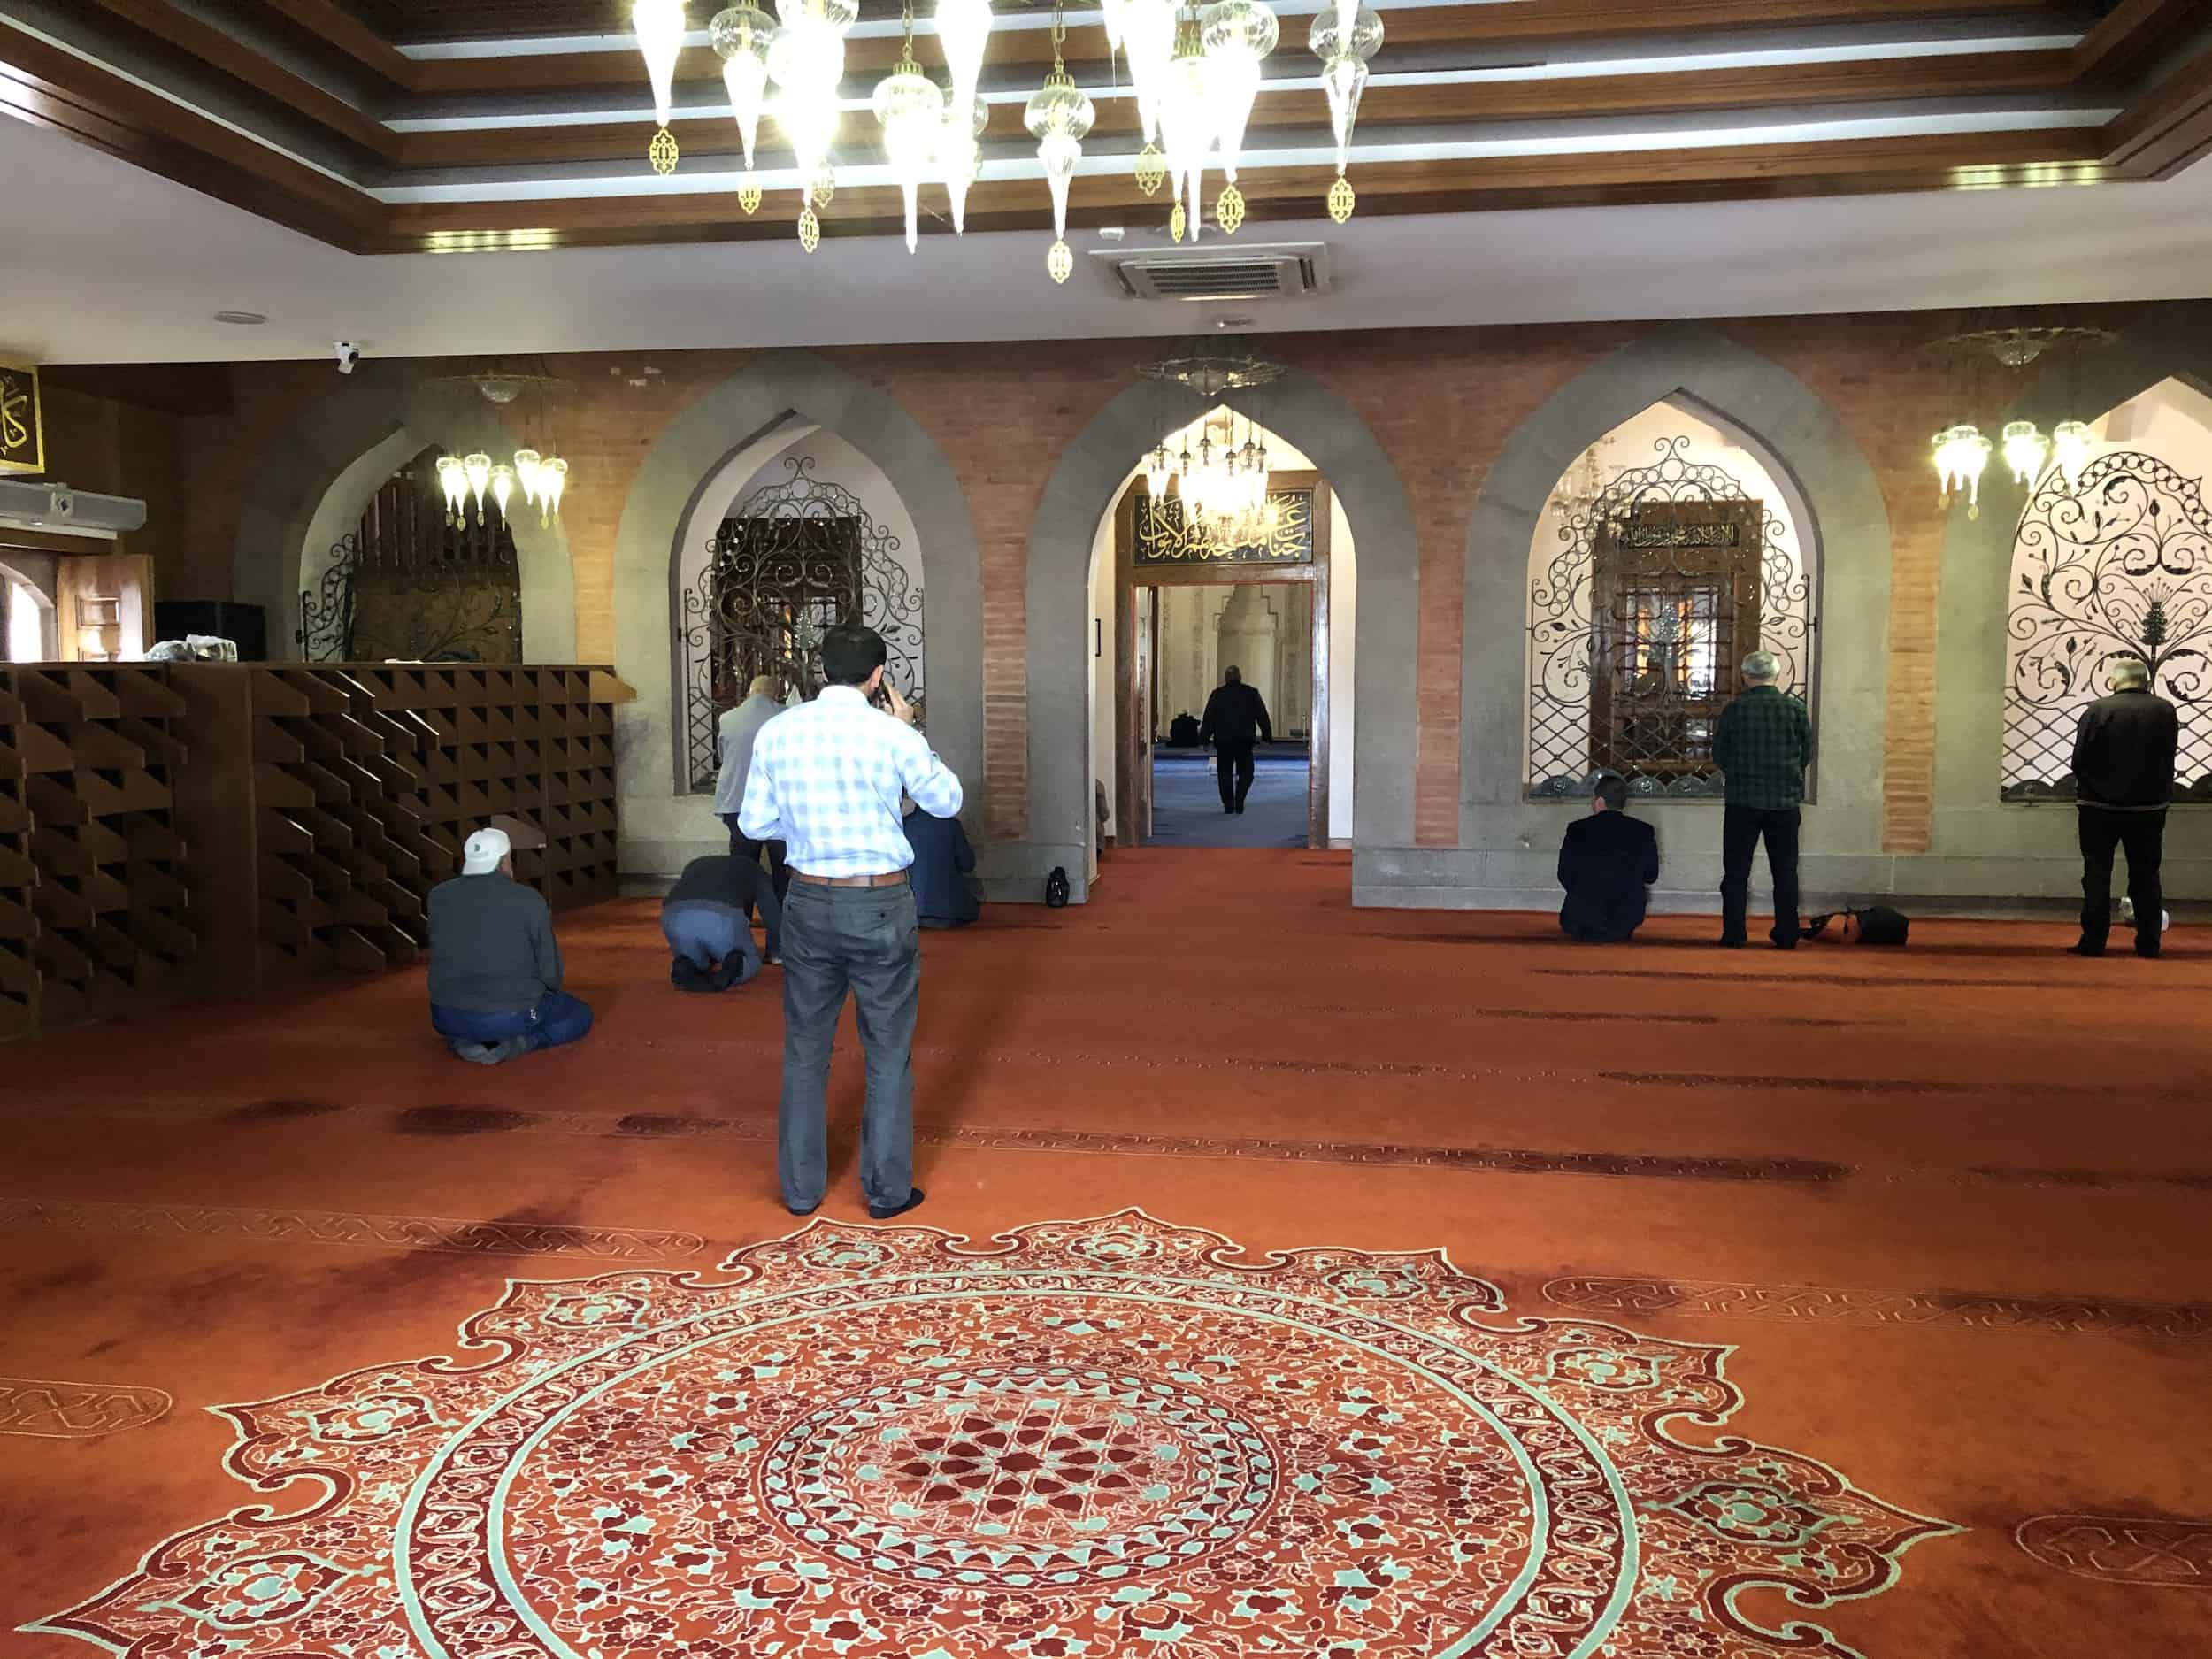 Northern addition to the prayer hall at the Hacı Bayram Mosque in Ulus, Ankara, Turkey